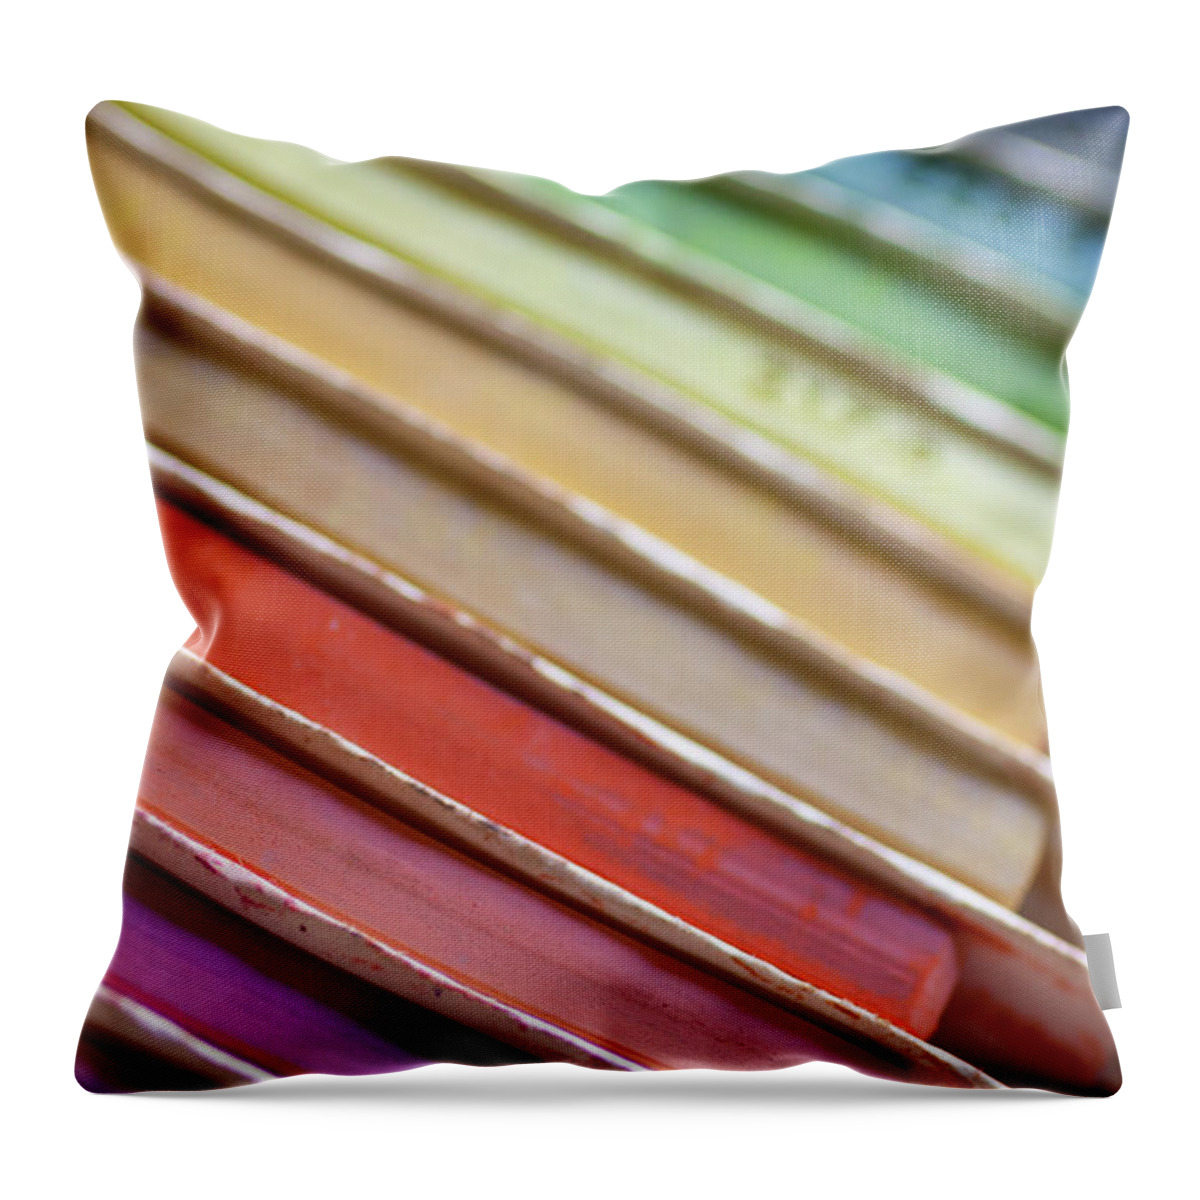 Rainbow Throw Pillow featuring the photograph Over The Rainbow by Ana V Ramirez